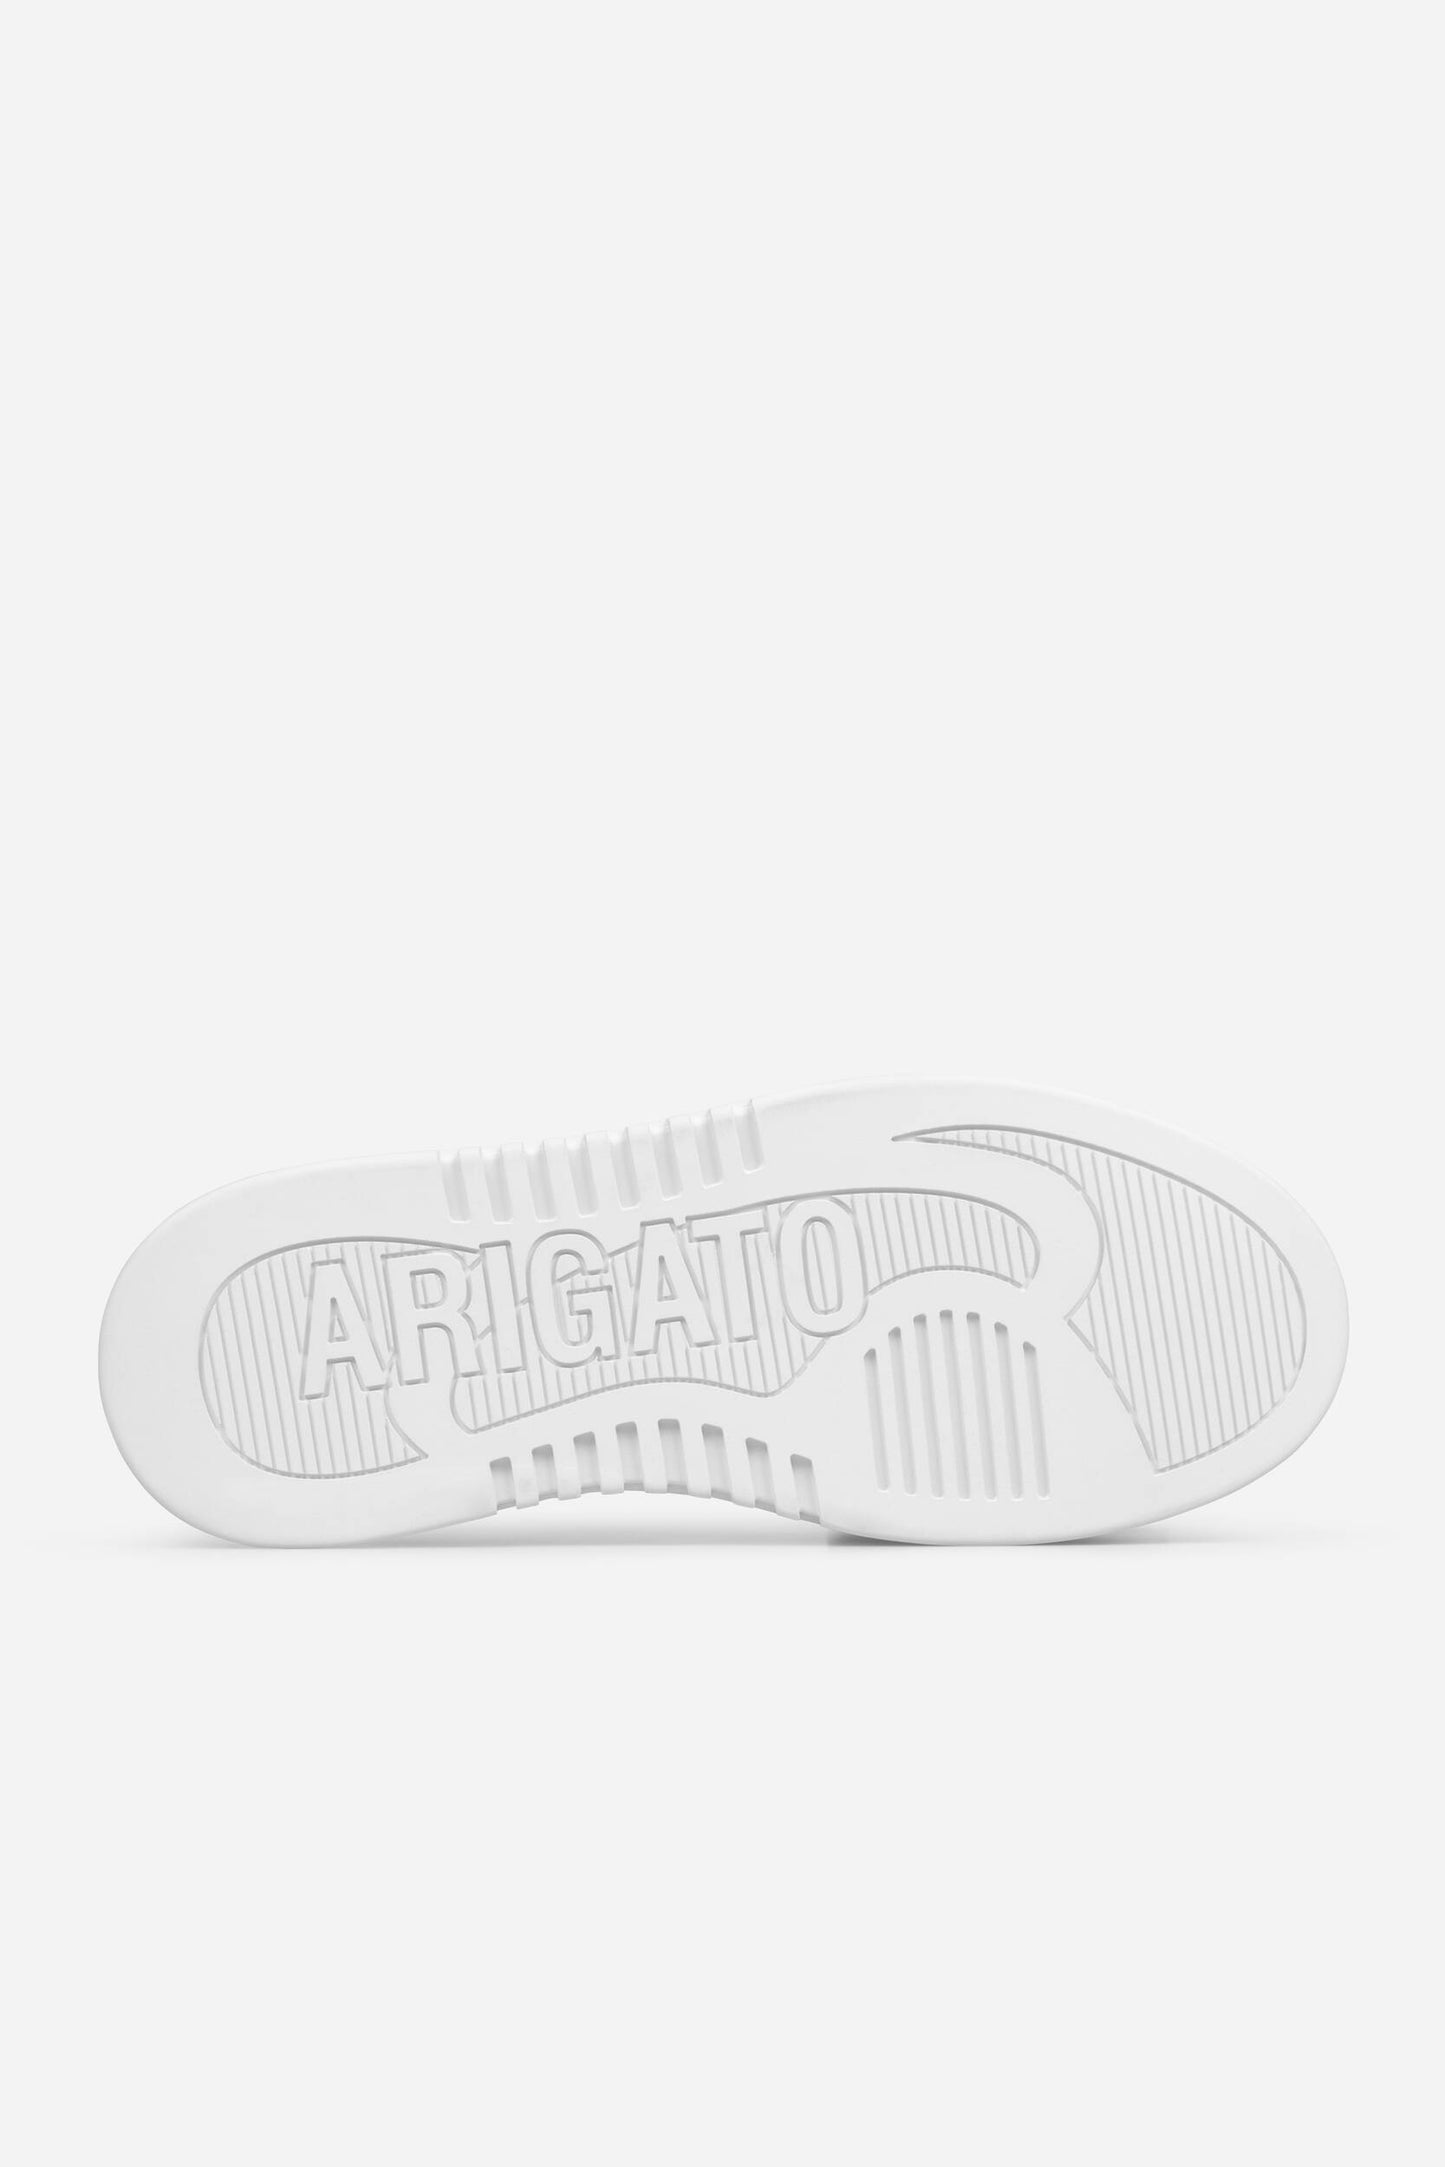 Axel Arigato Sneakers Orbit Vintage